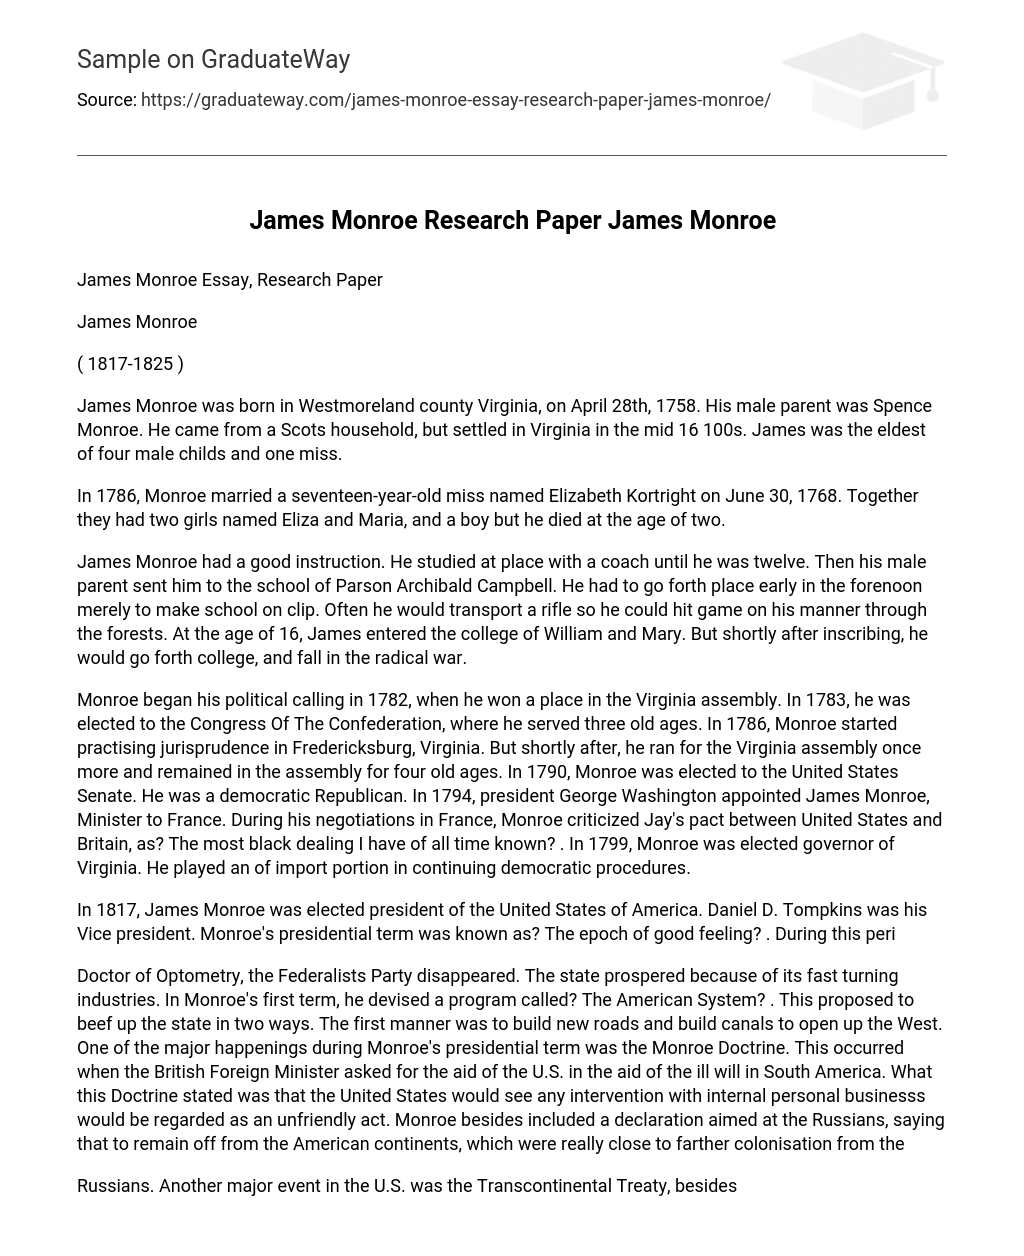 James Monroe Research Paper James Monroe